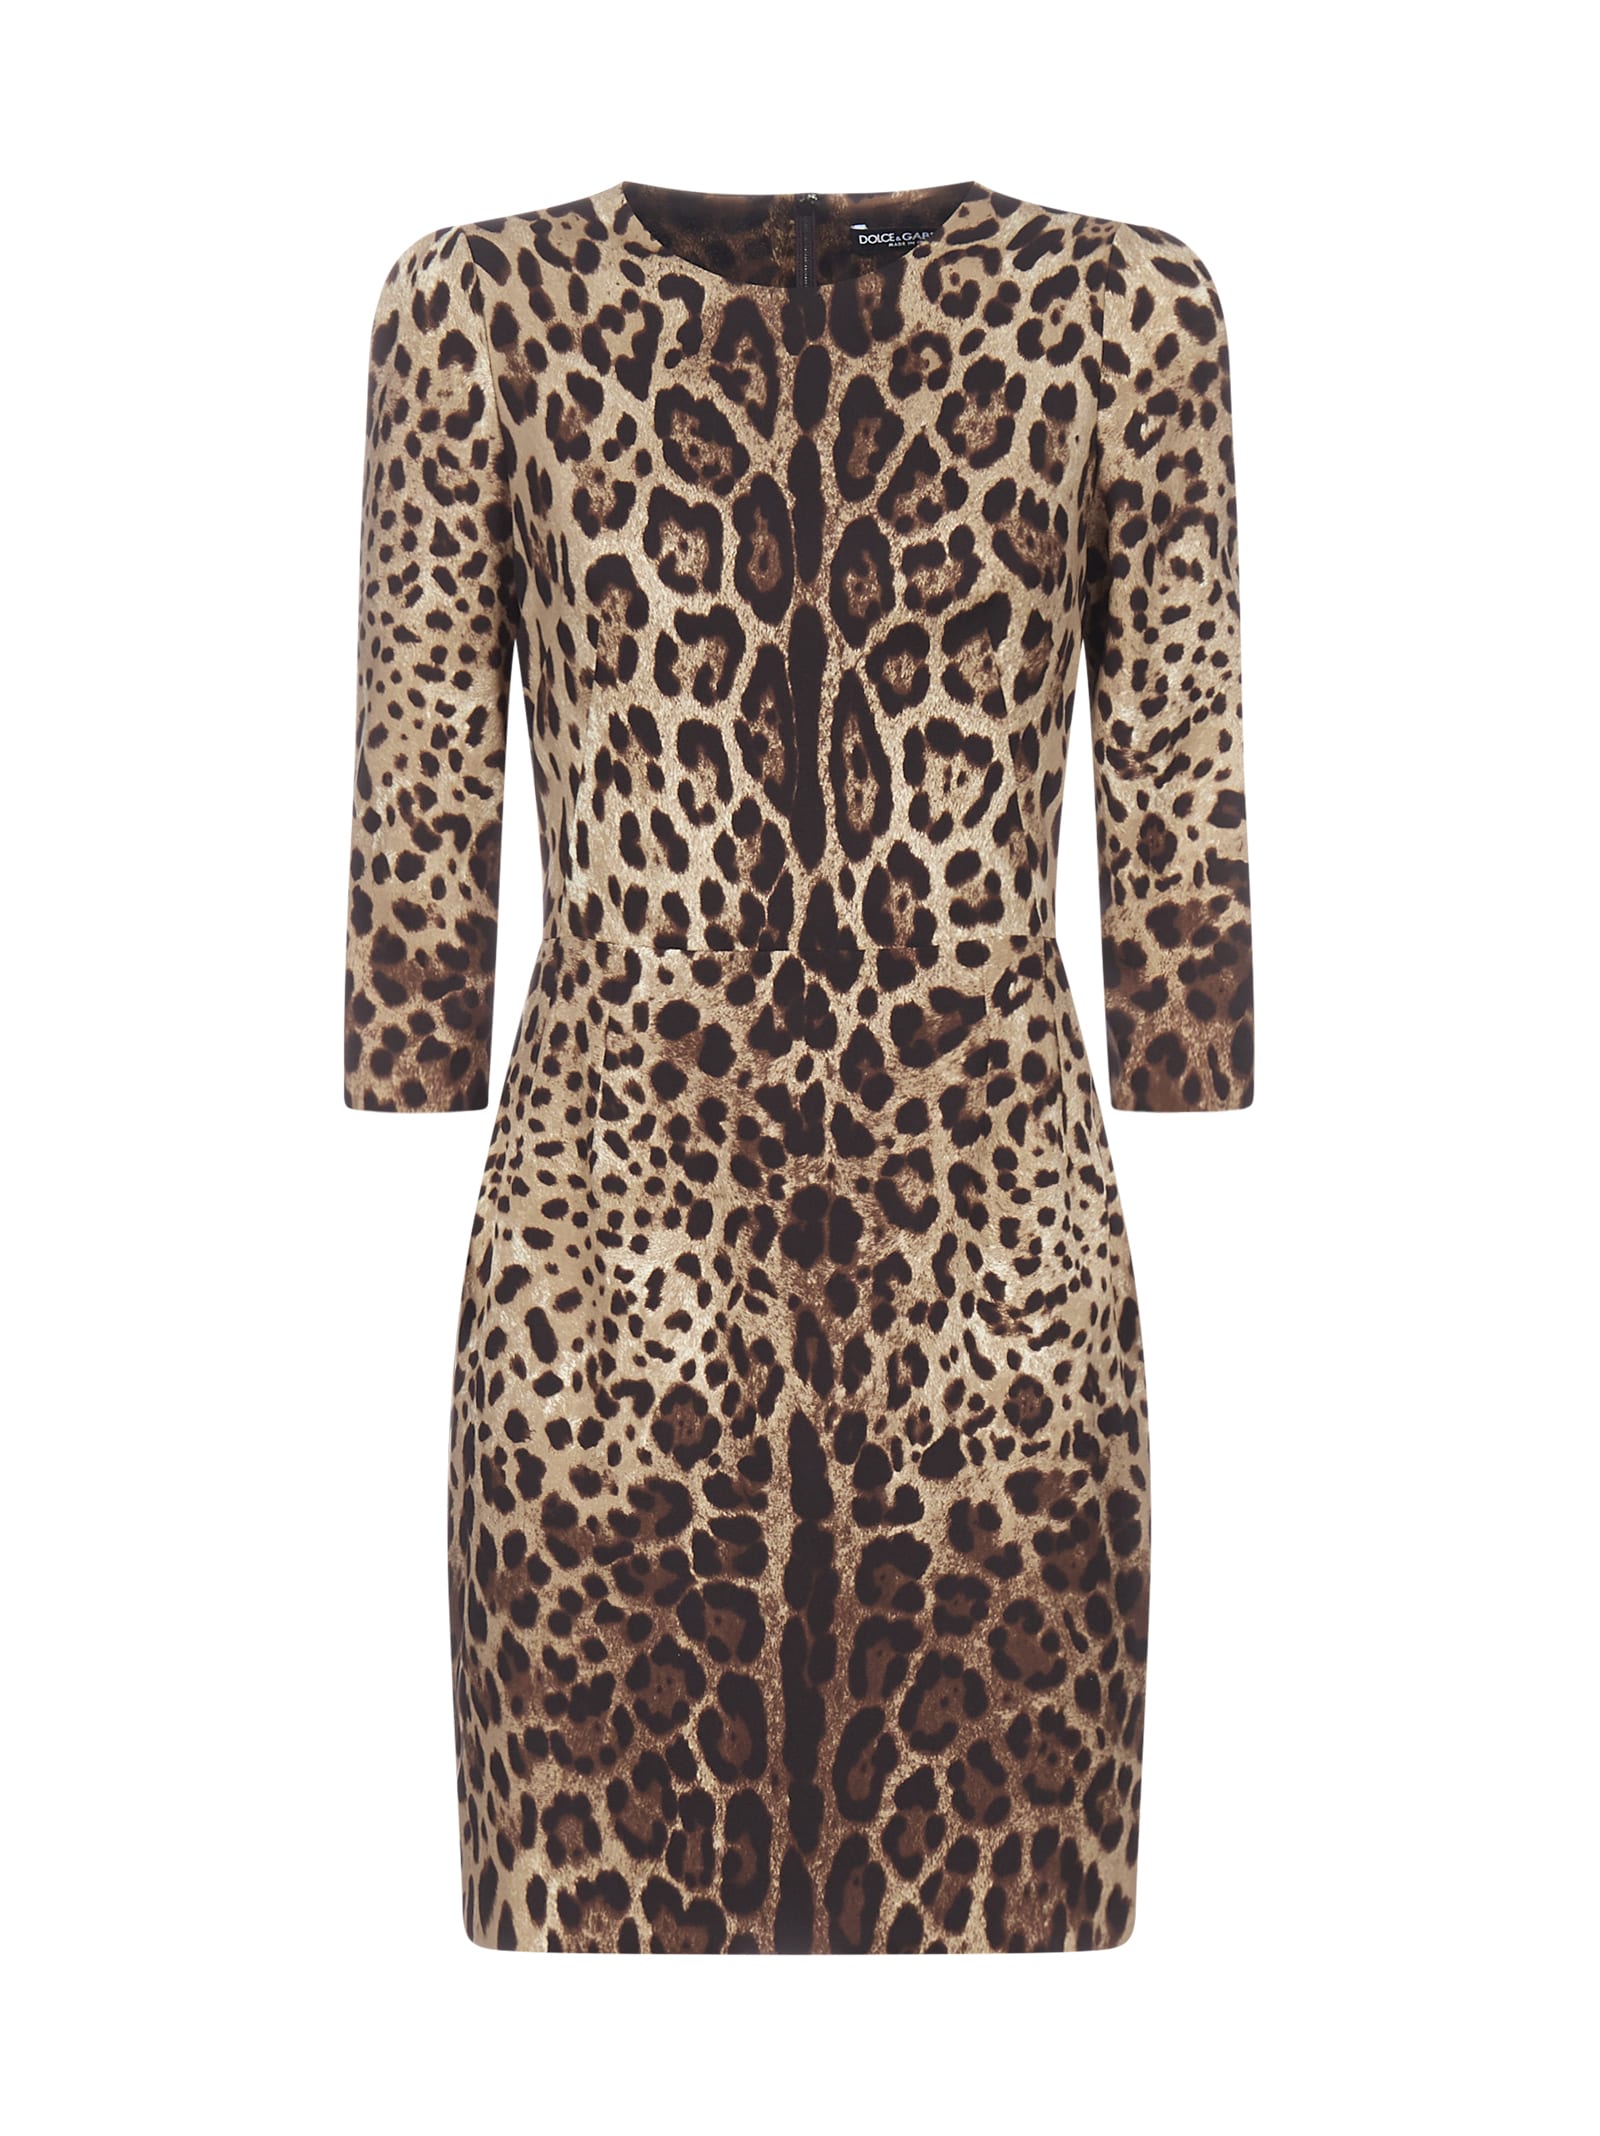 Dolce And Gabbana Leopard Print Off The Shoulder Silk Mini Dress Leopard 70 Off Sale Coshio